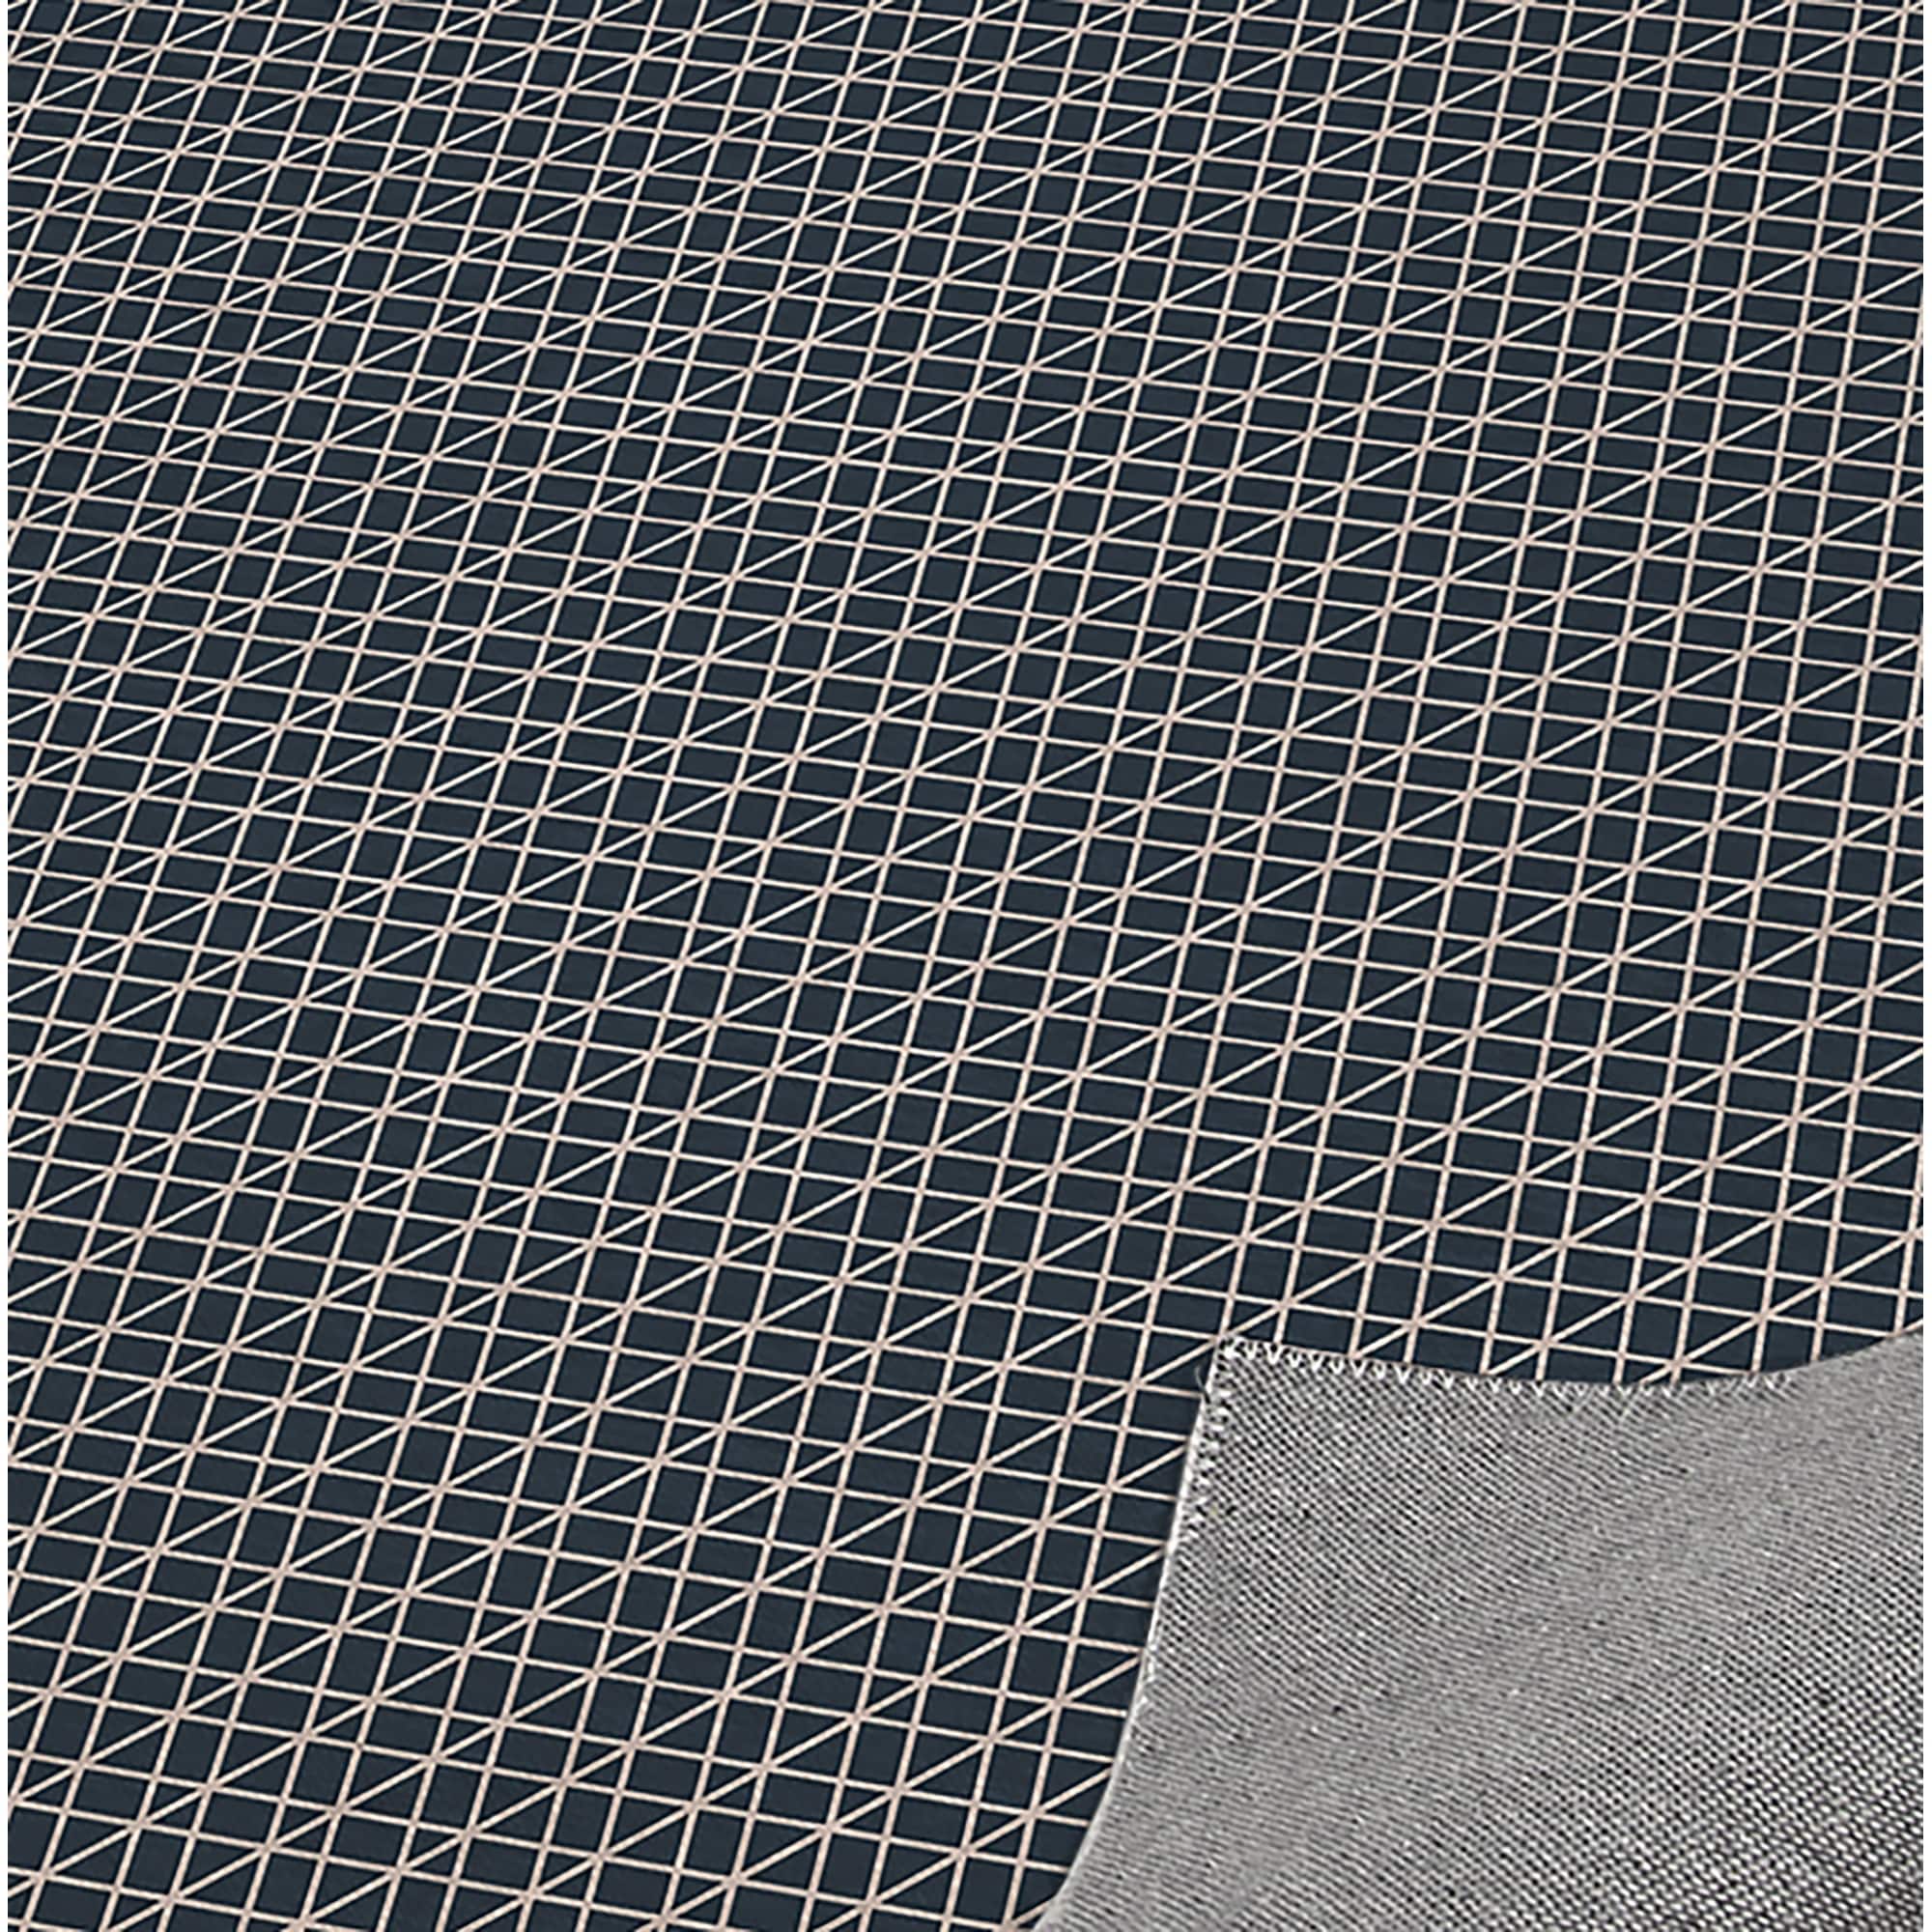 AXIS DARK GREY Indoor Floor Mat By Kavka Designs - Bed Bath & Beyond -  31257178